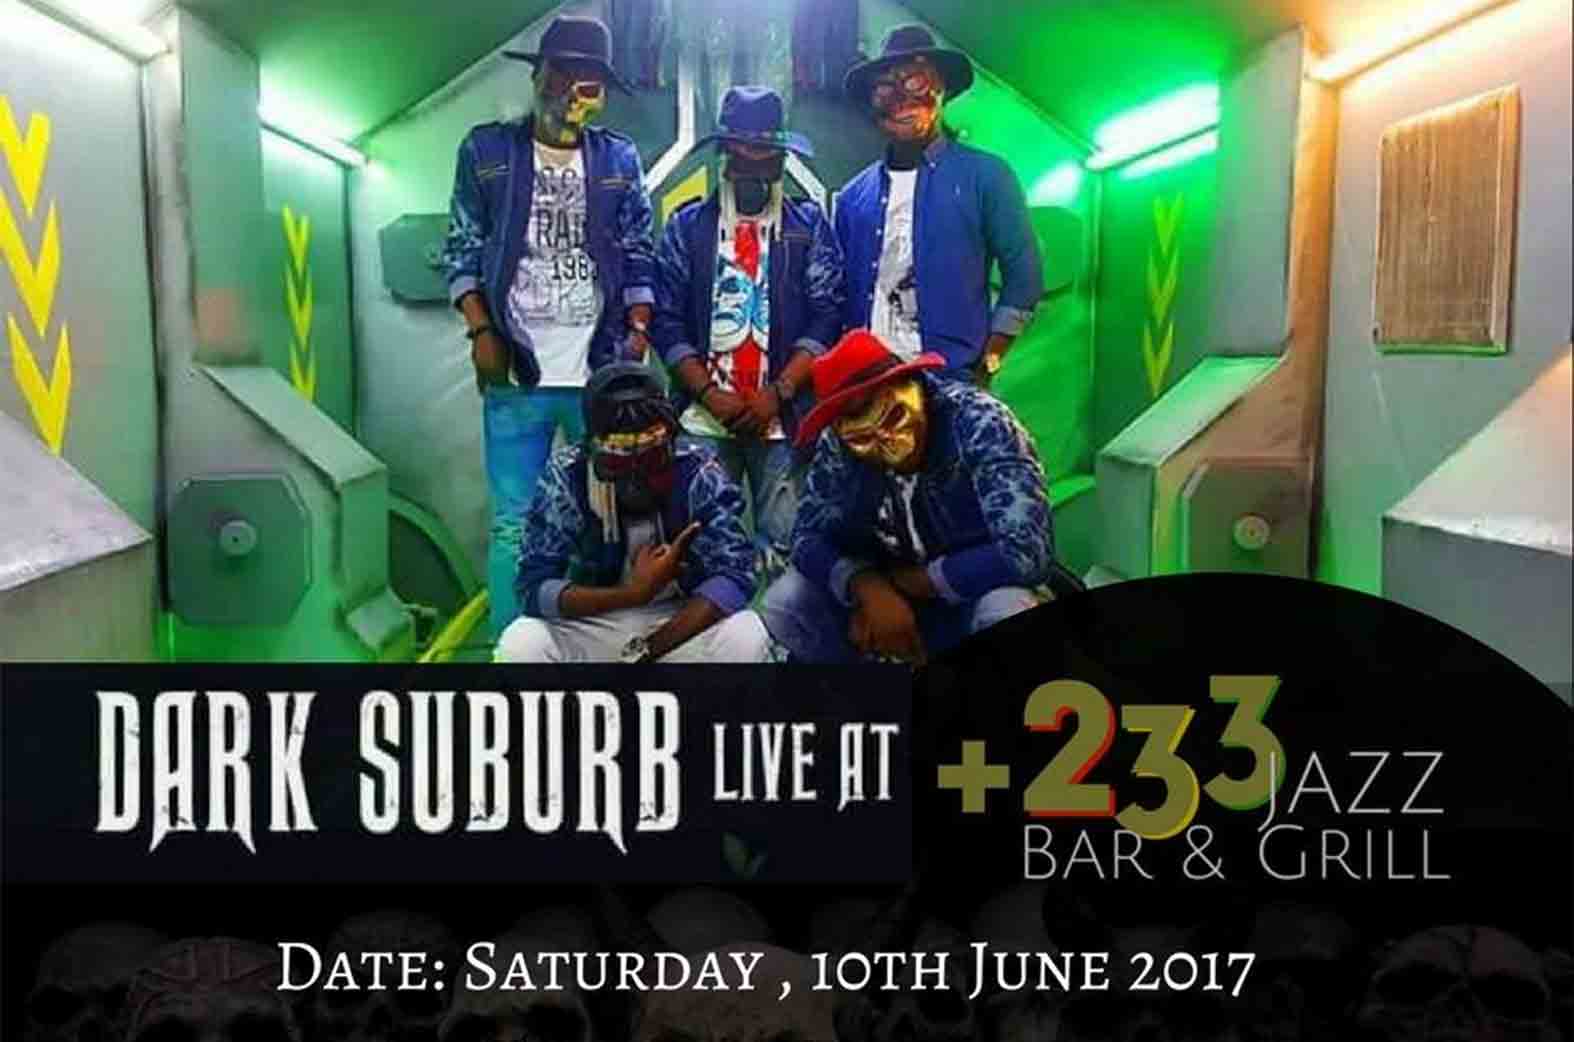 Dark Suburb Live at +233 Jazz Bar & Grill